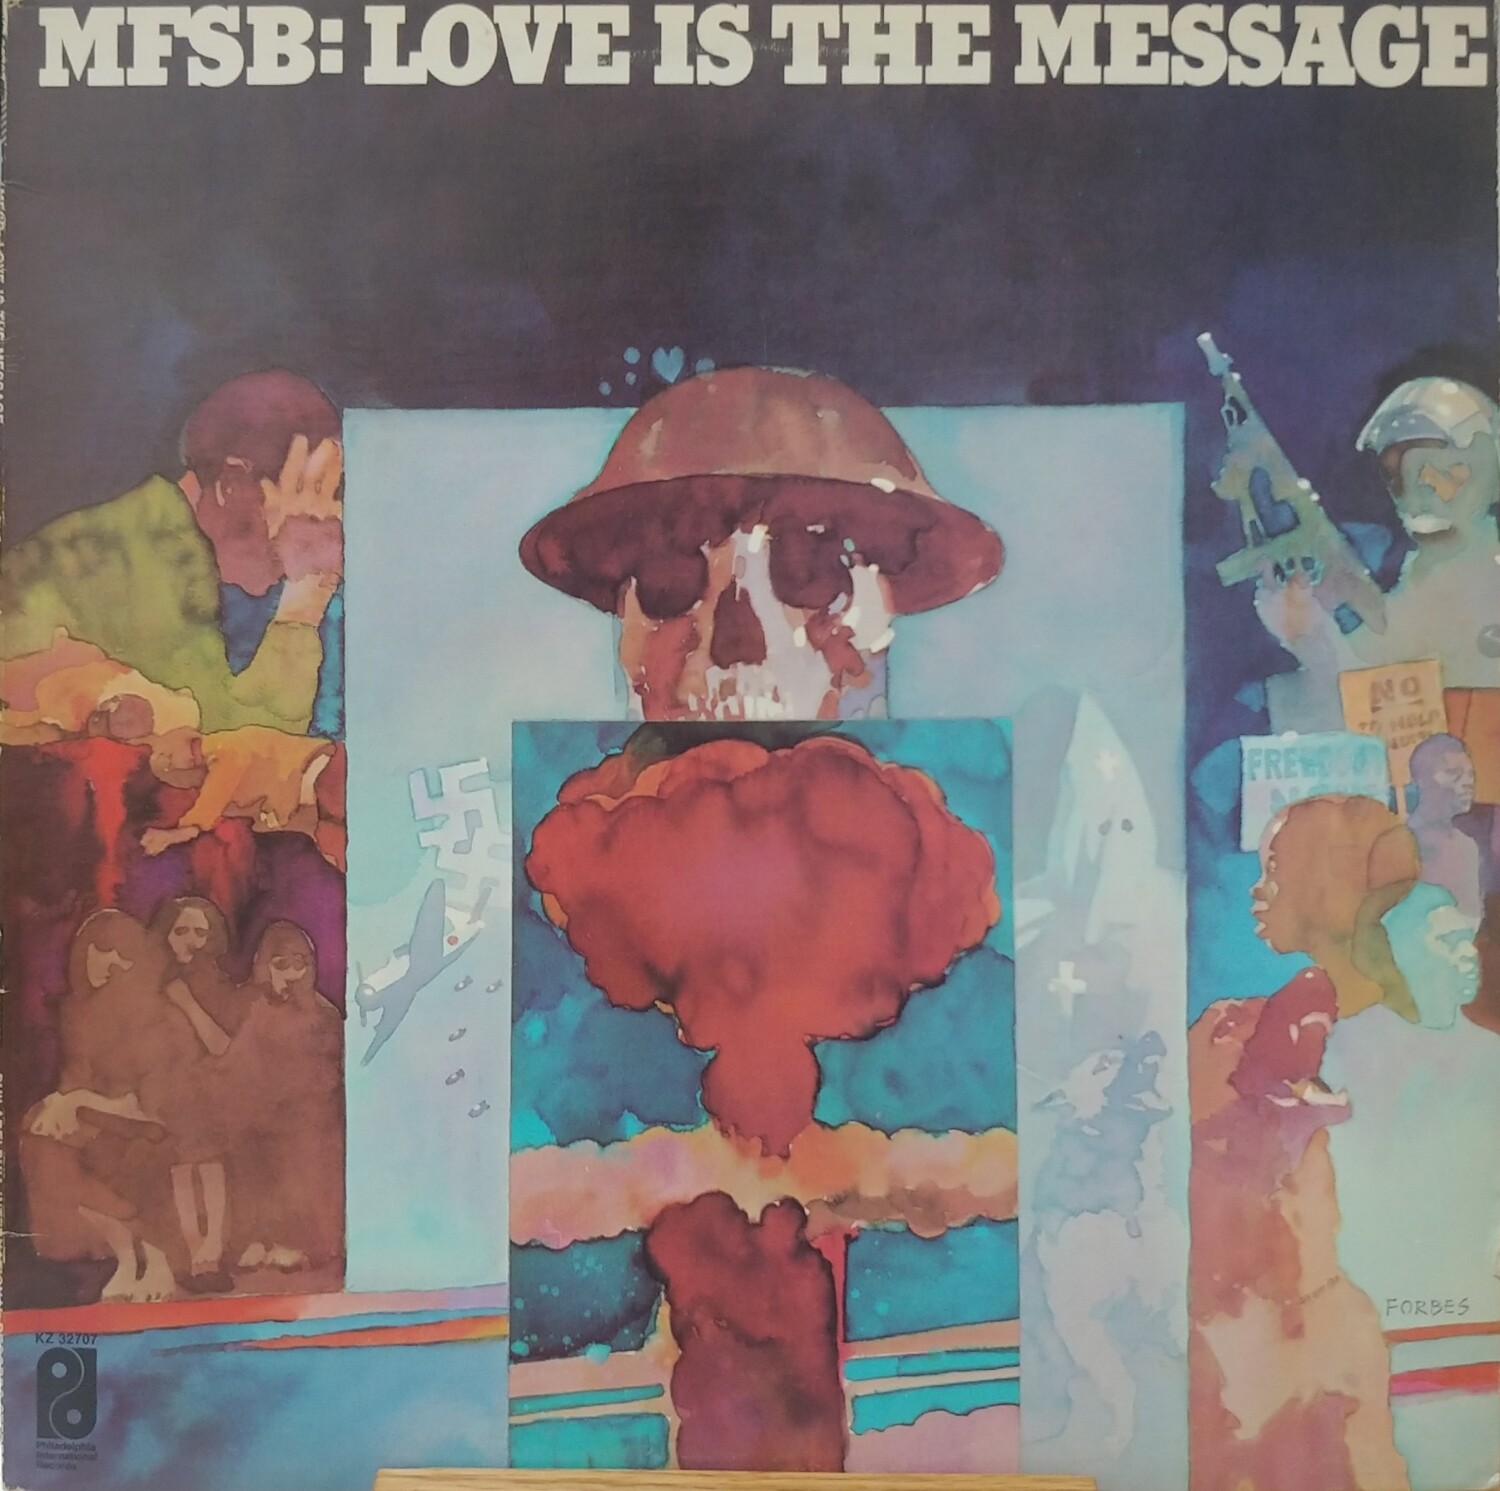 MFSB - Love is the message